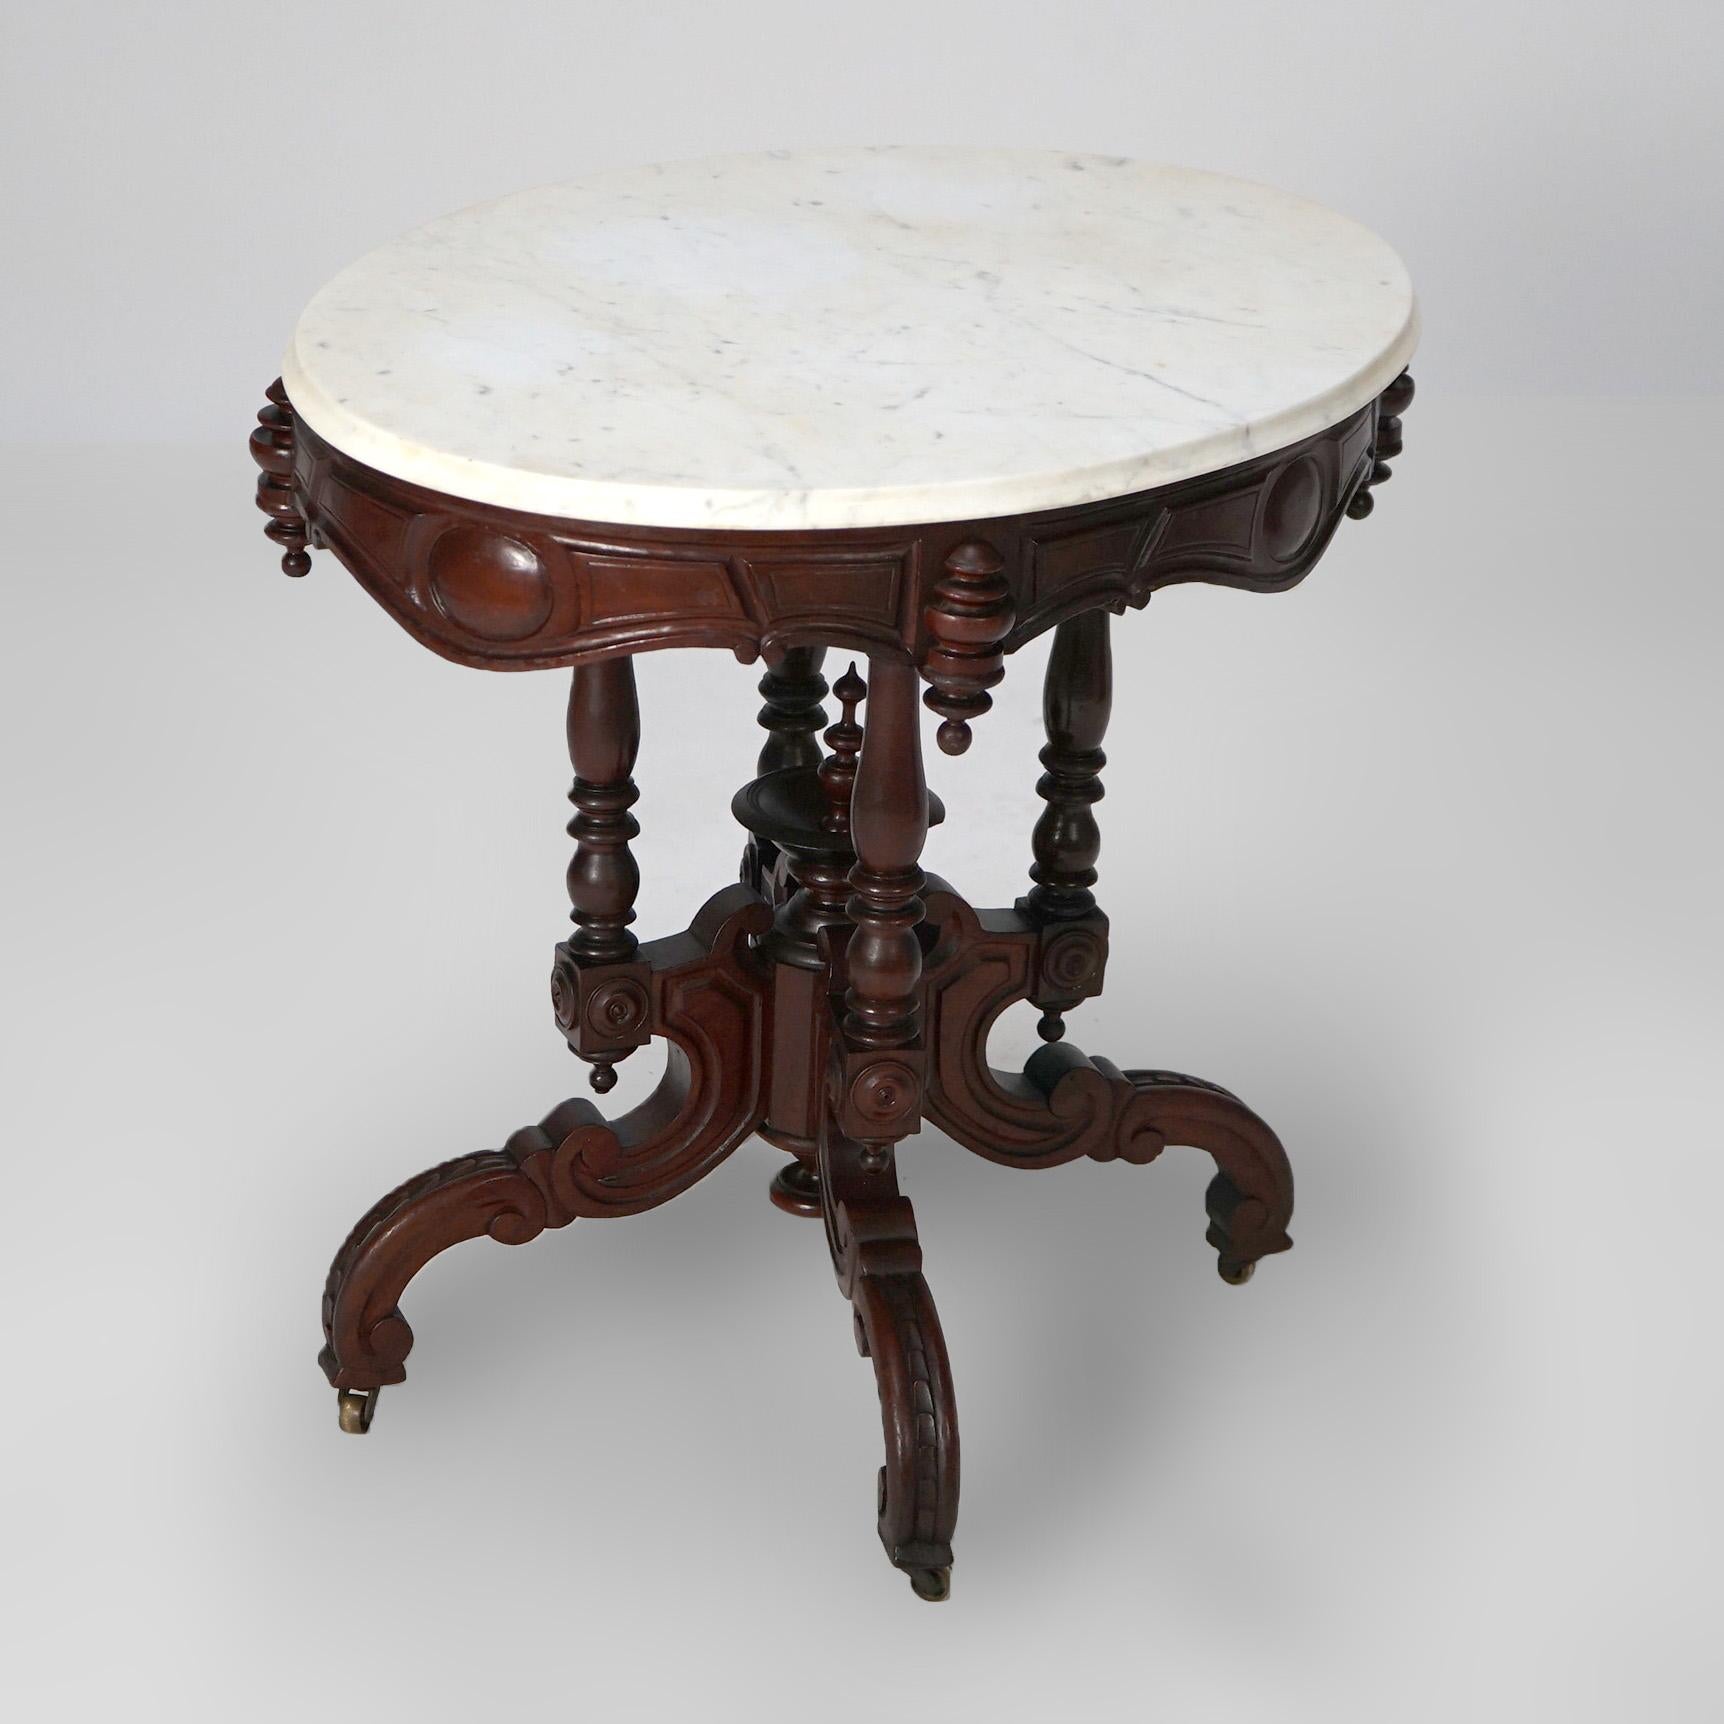 Antique Renaissance Revival Brooks Walnut Oval Marble Top Parlor Table c1890 For Sale 6